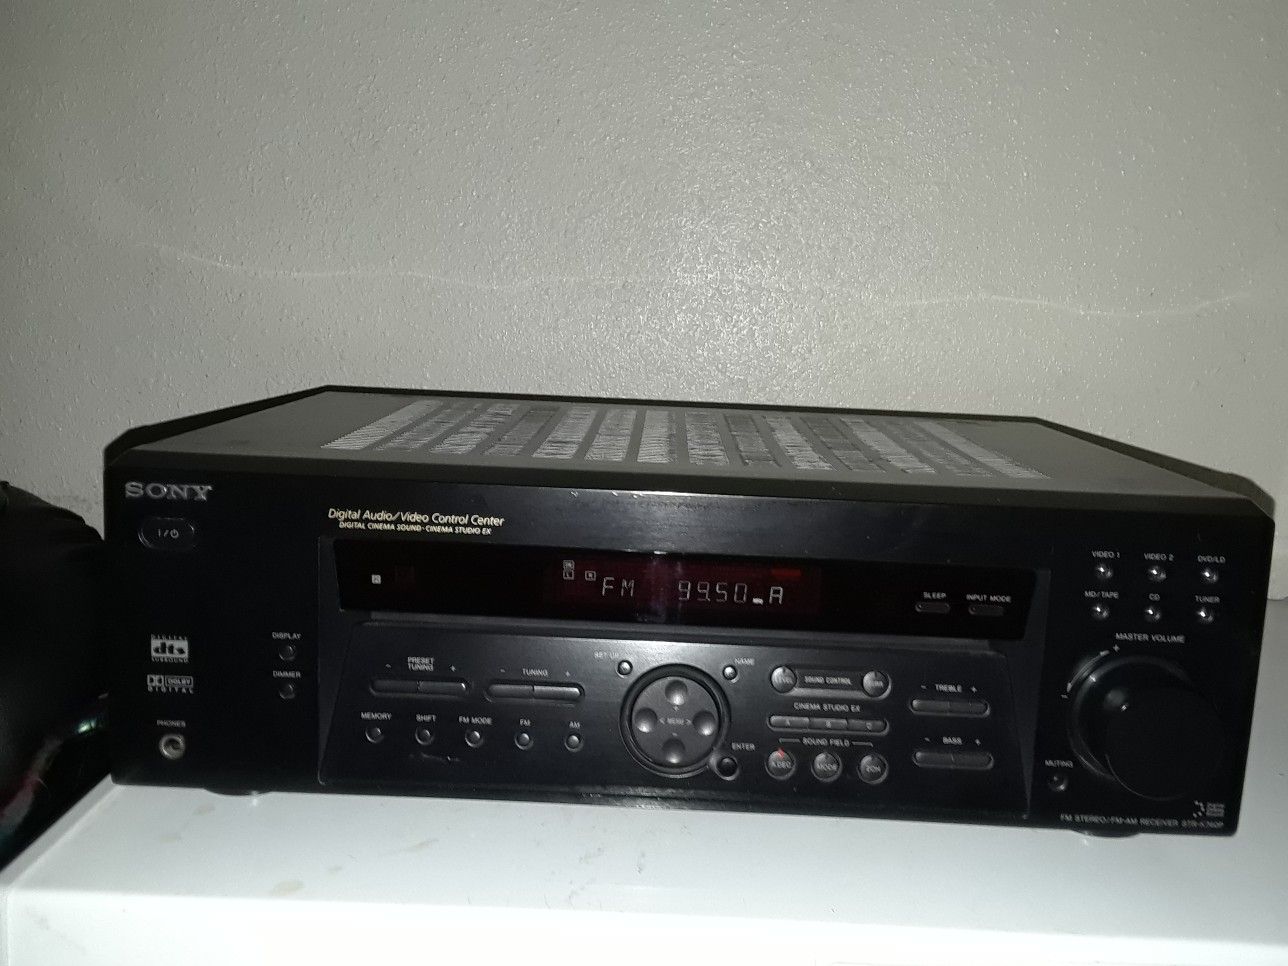 SONY- digital audio video control center receiver,STR-K740P